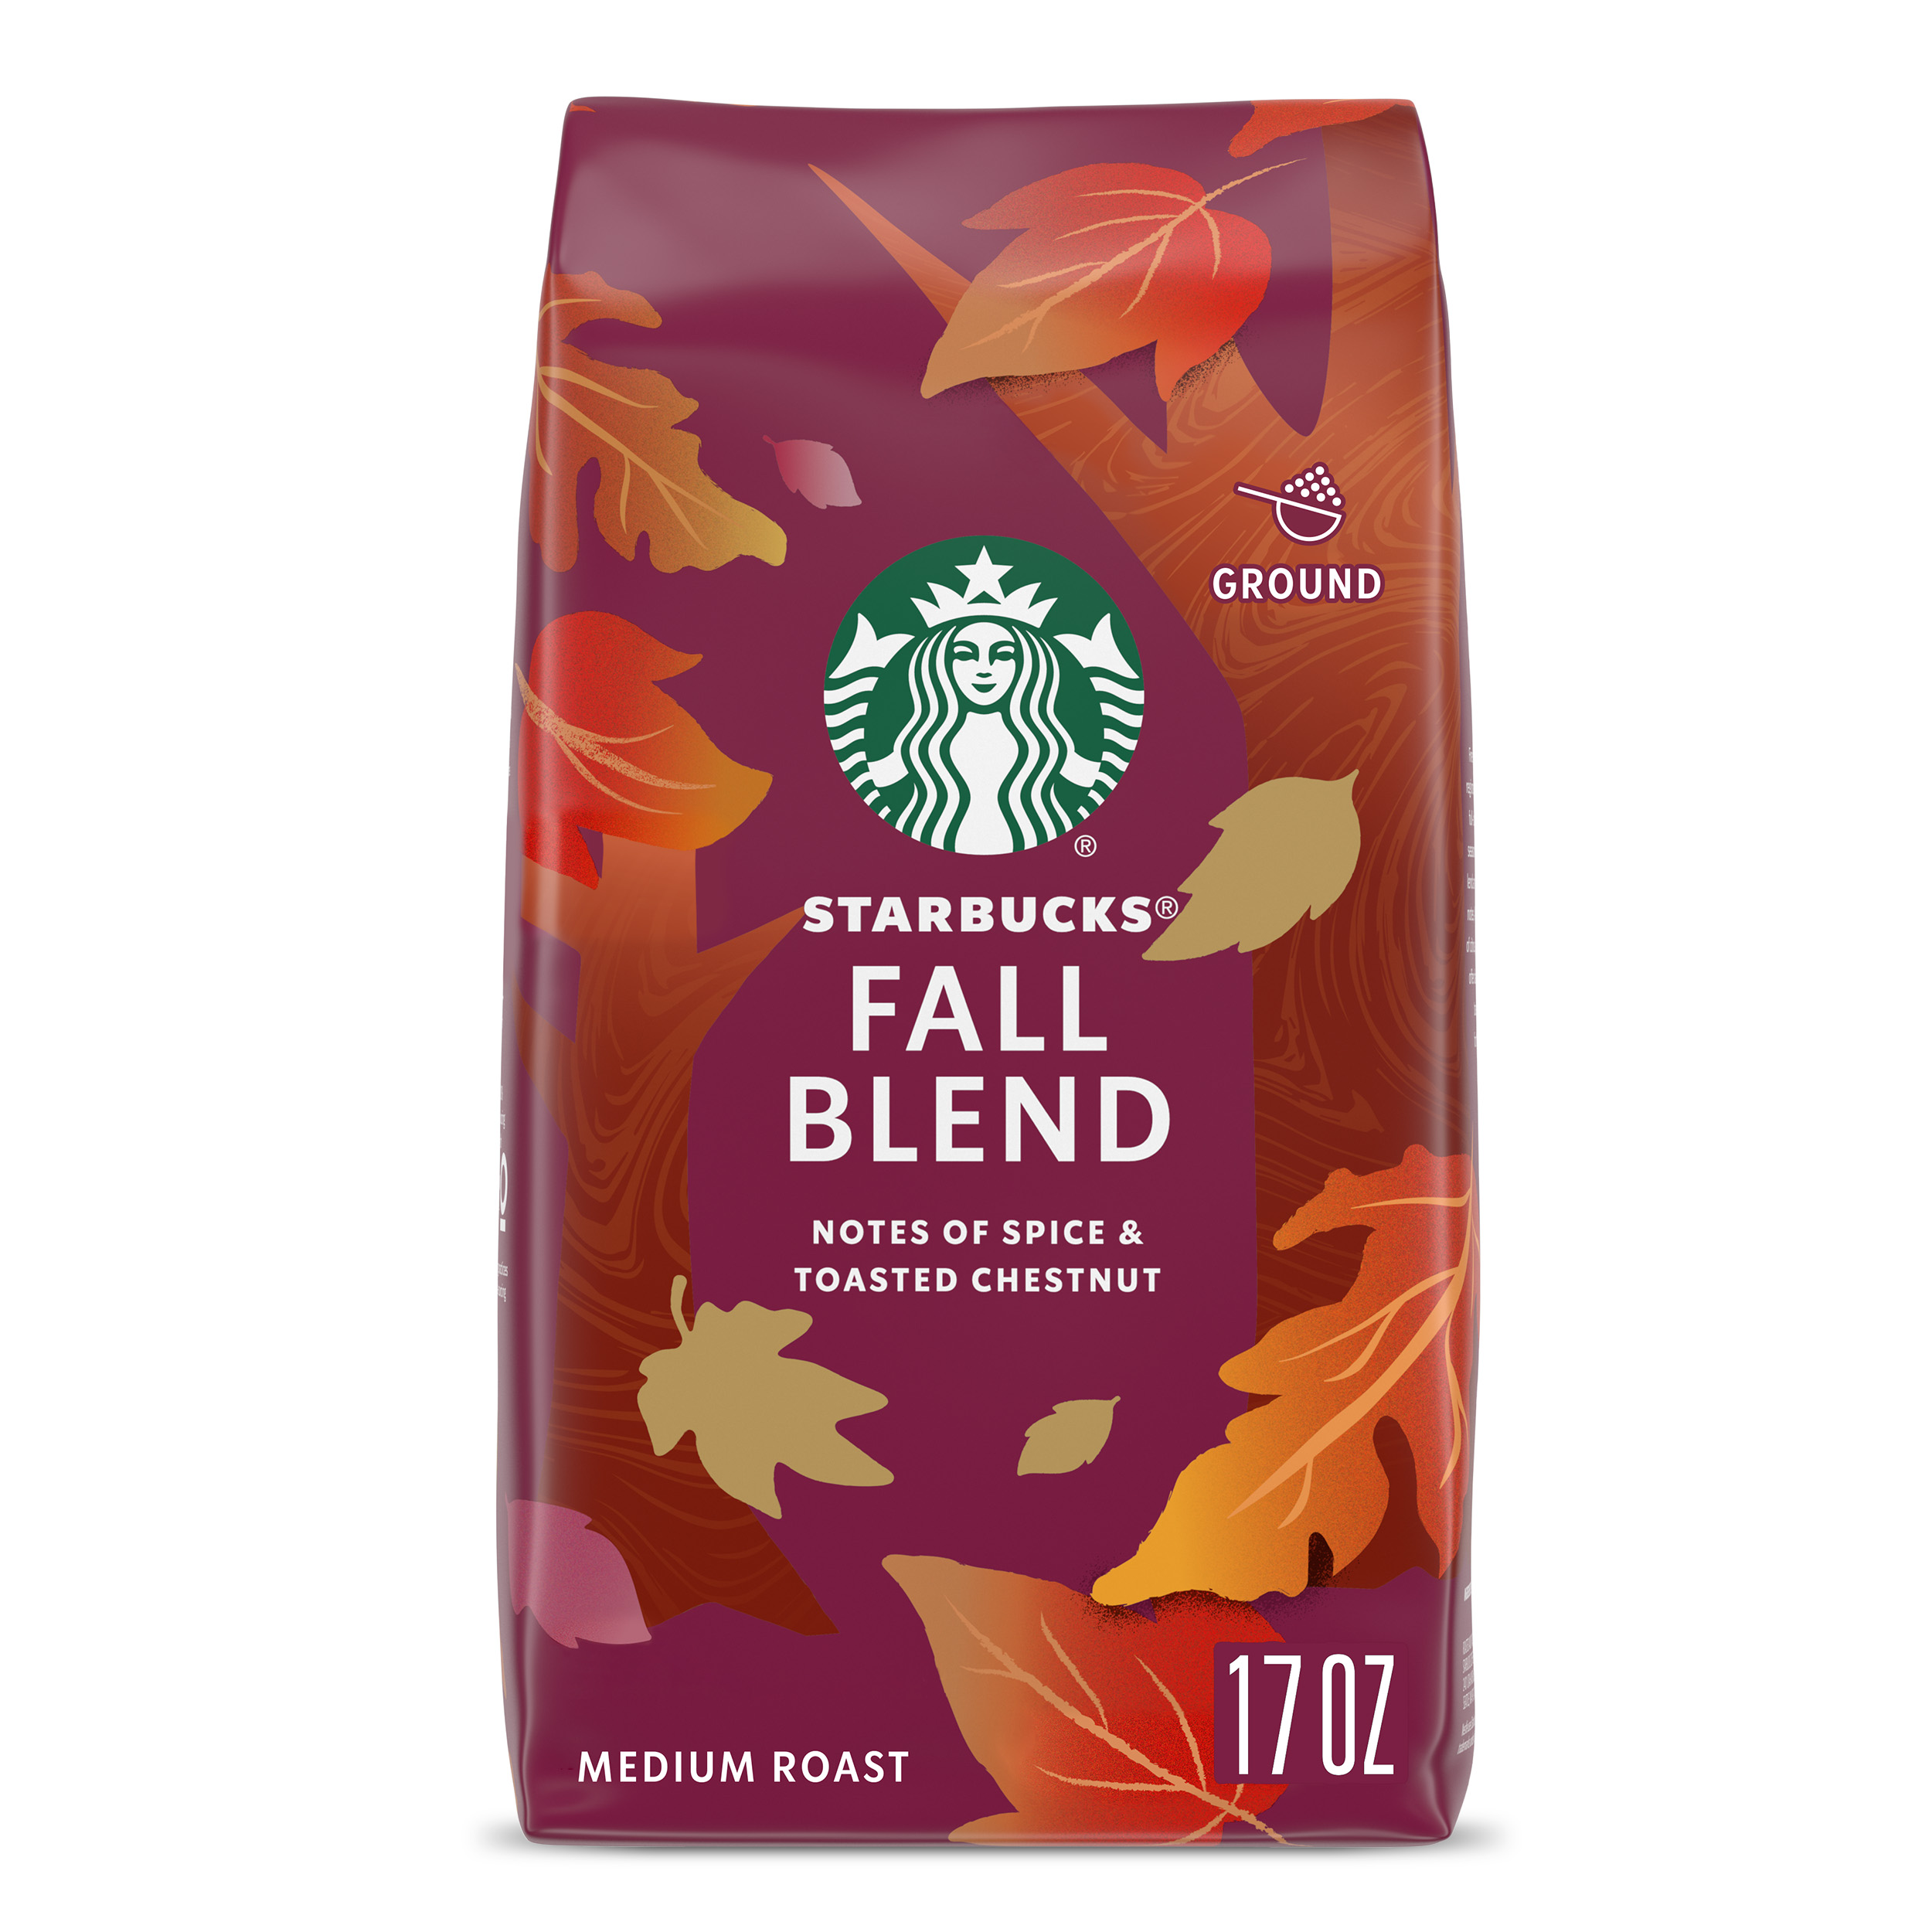 Starbucks Arabica Beans Fall Blend, Ground Medium Roast Coffee, 17 oz - image 1 of 10